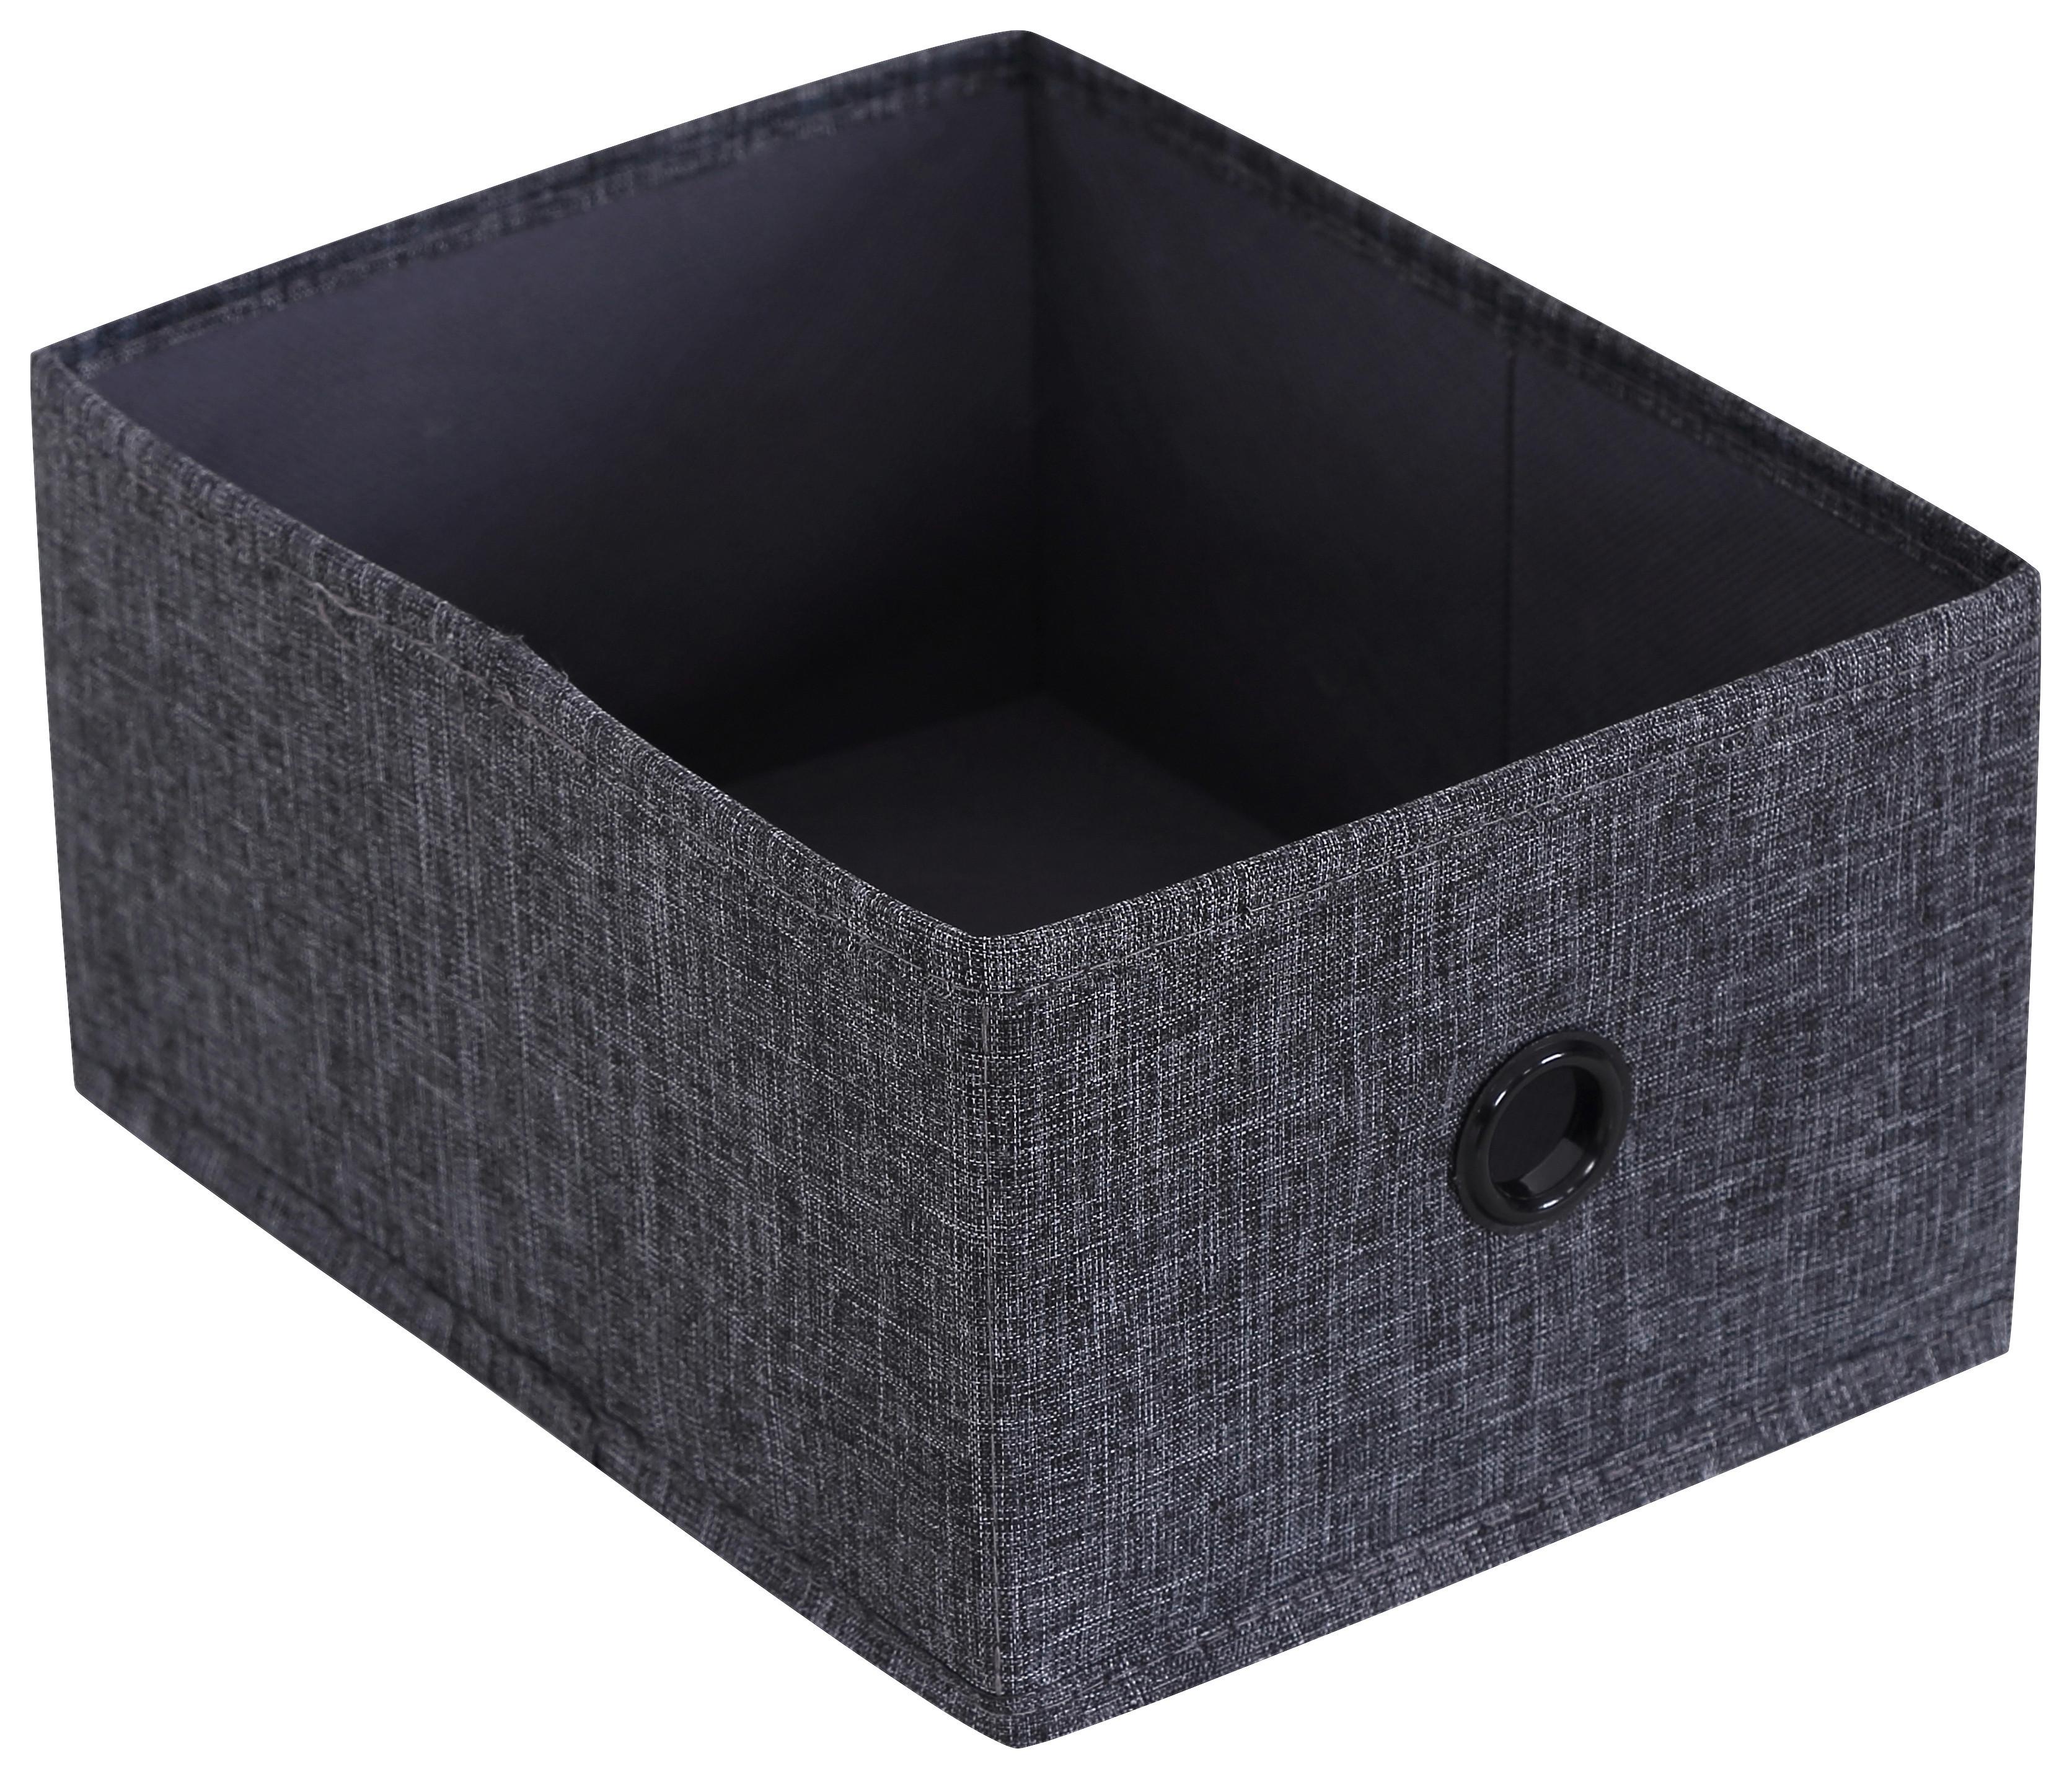 Aufbewahrungsbox Nahla in Grau - Grau, Konventionell, Karton/Textil (23/12/18cm) - Modern Living